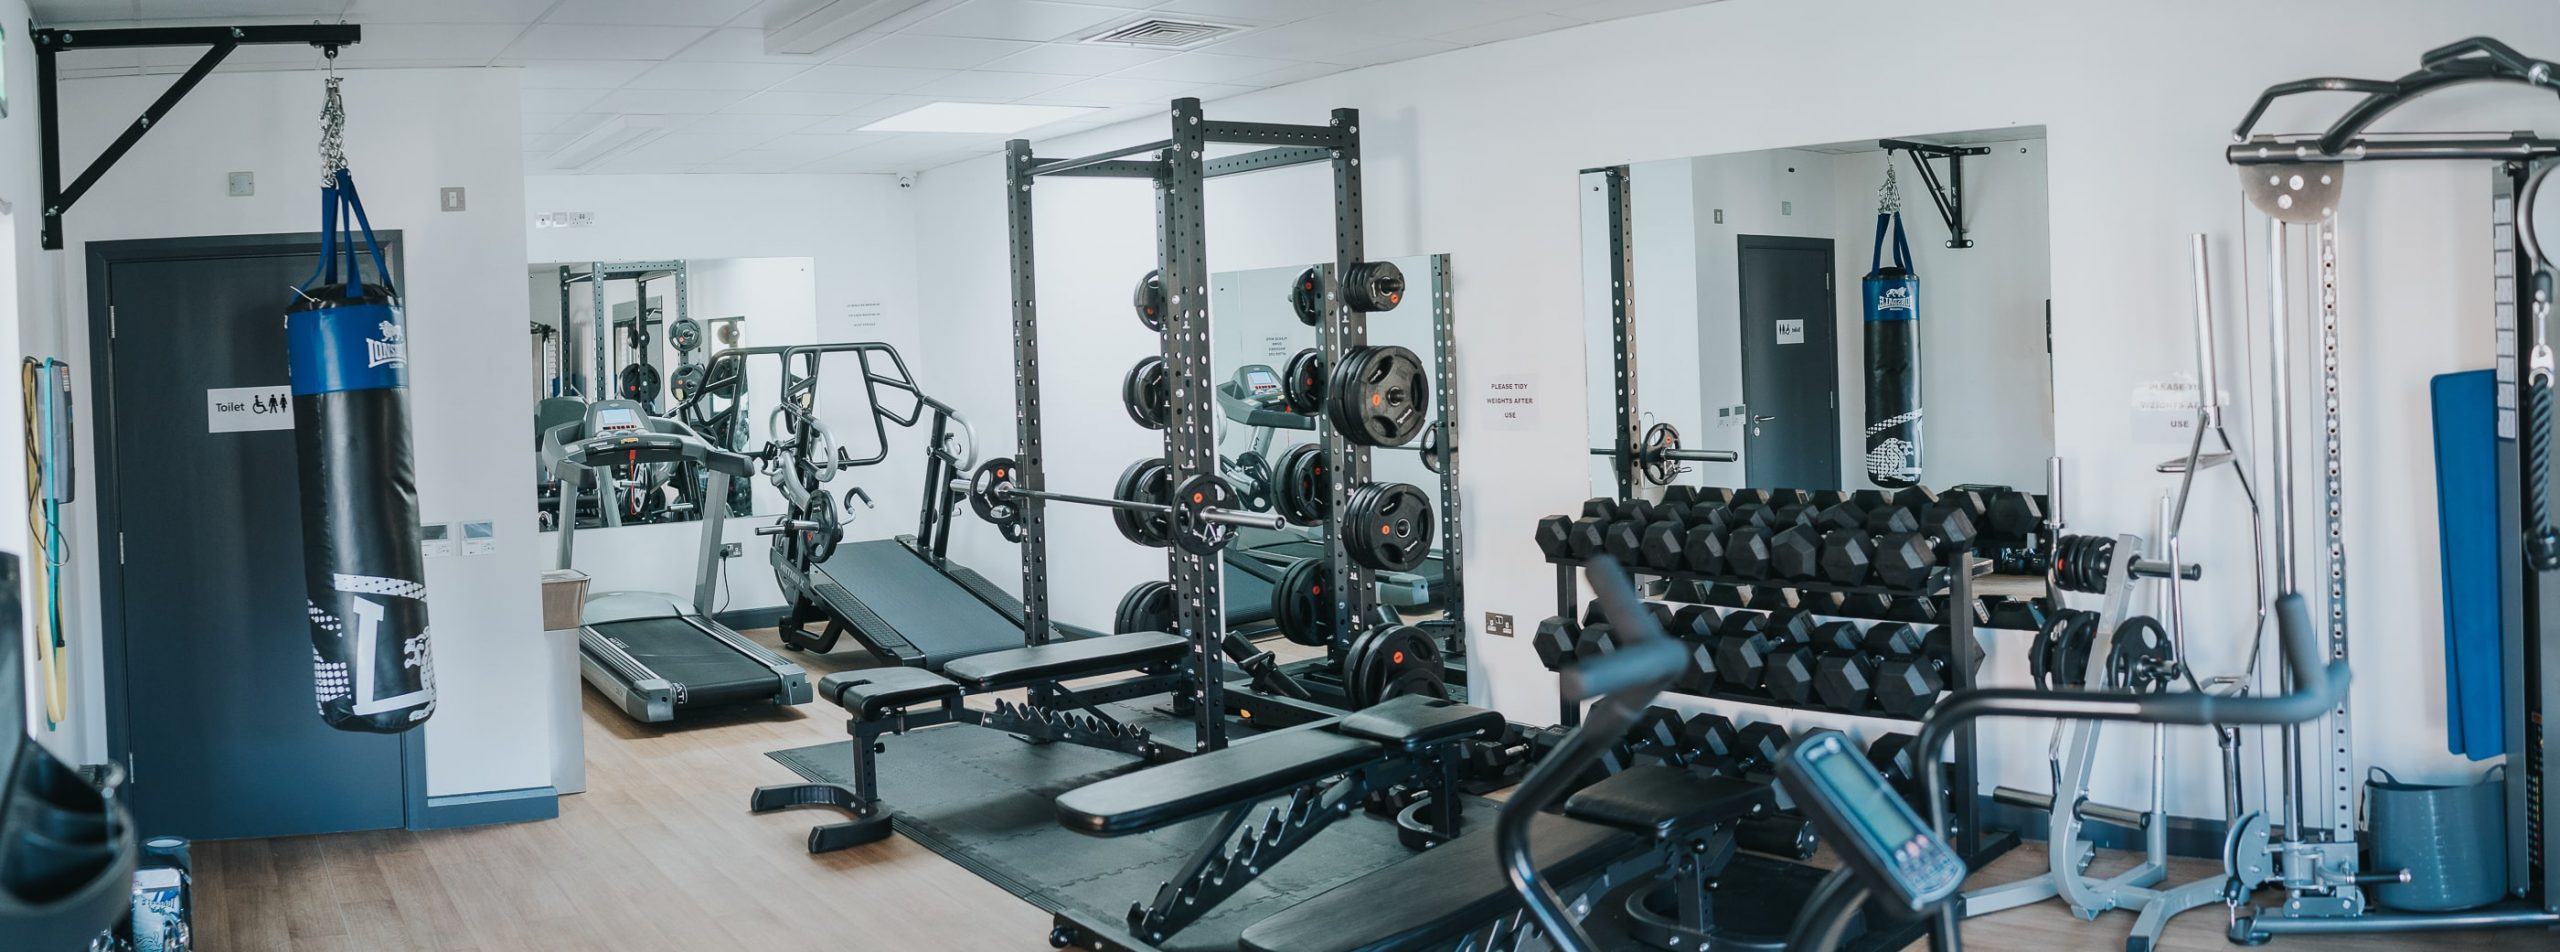 Modular gym facility